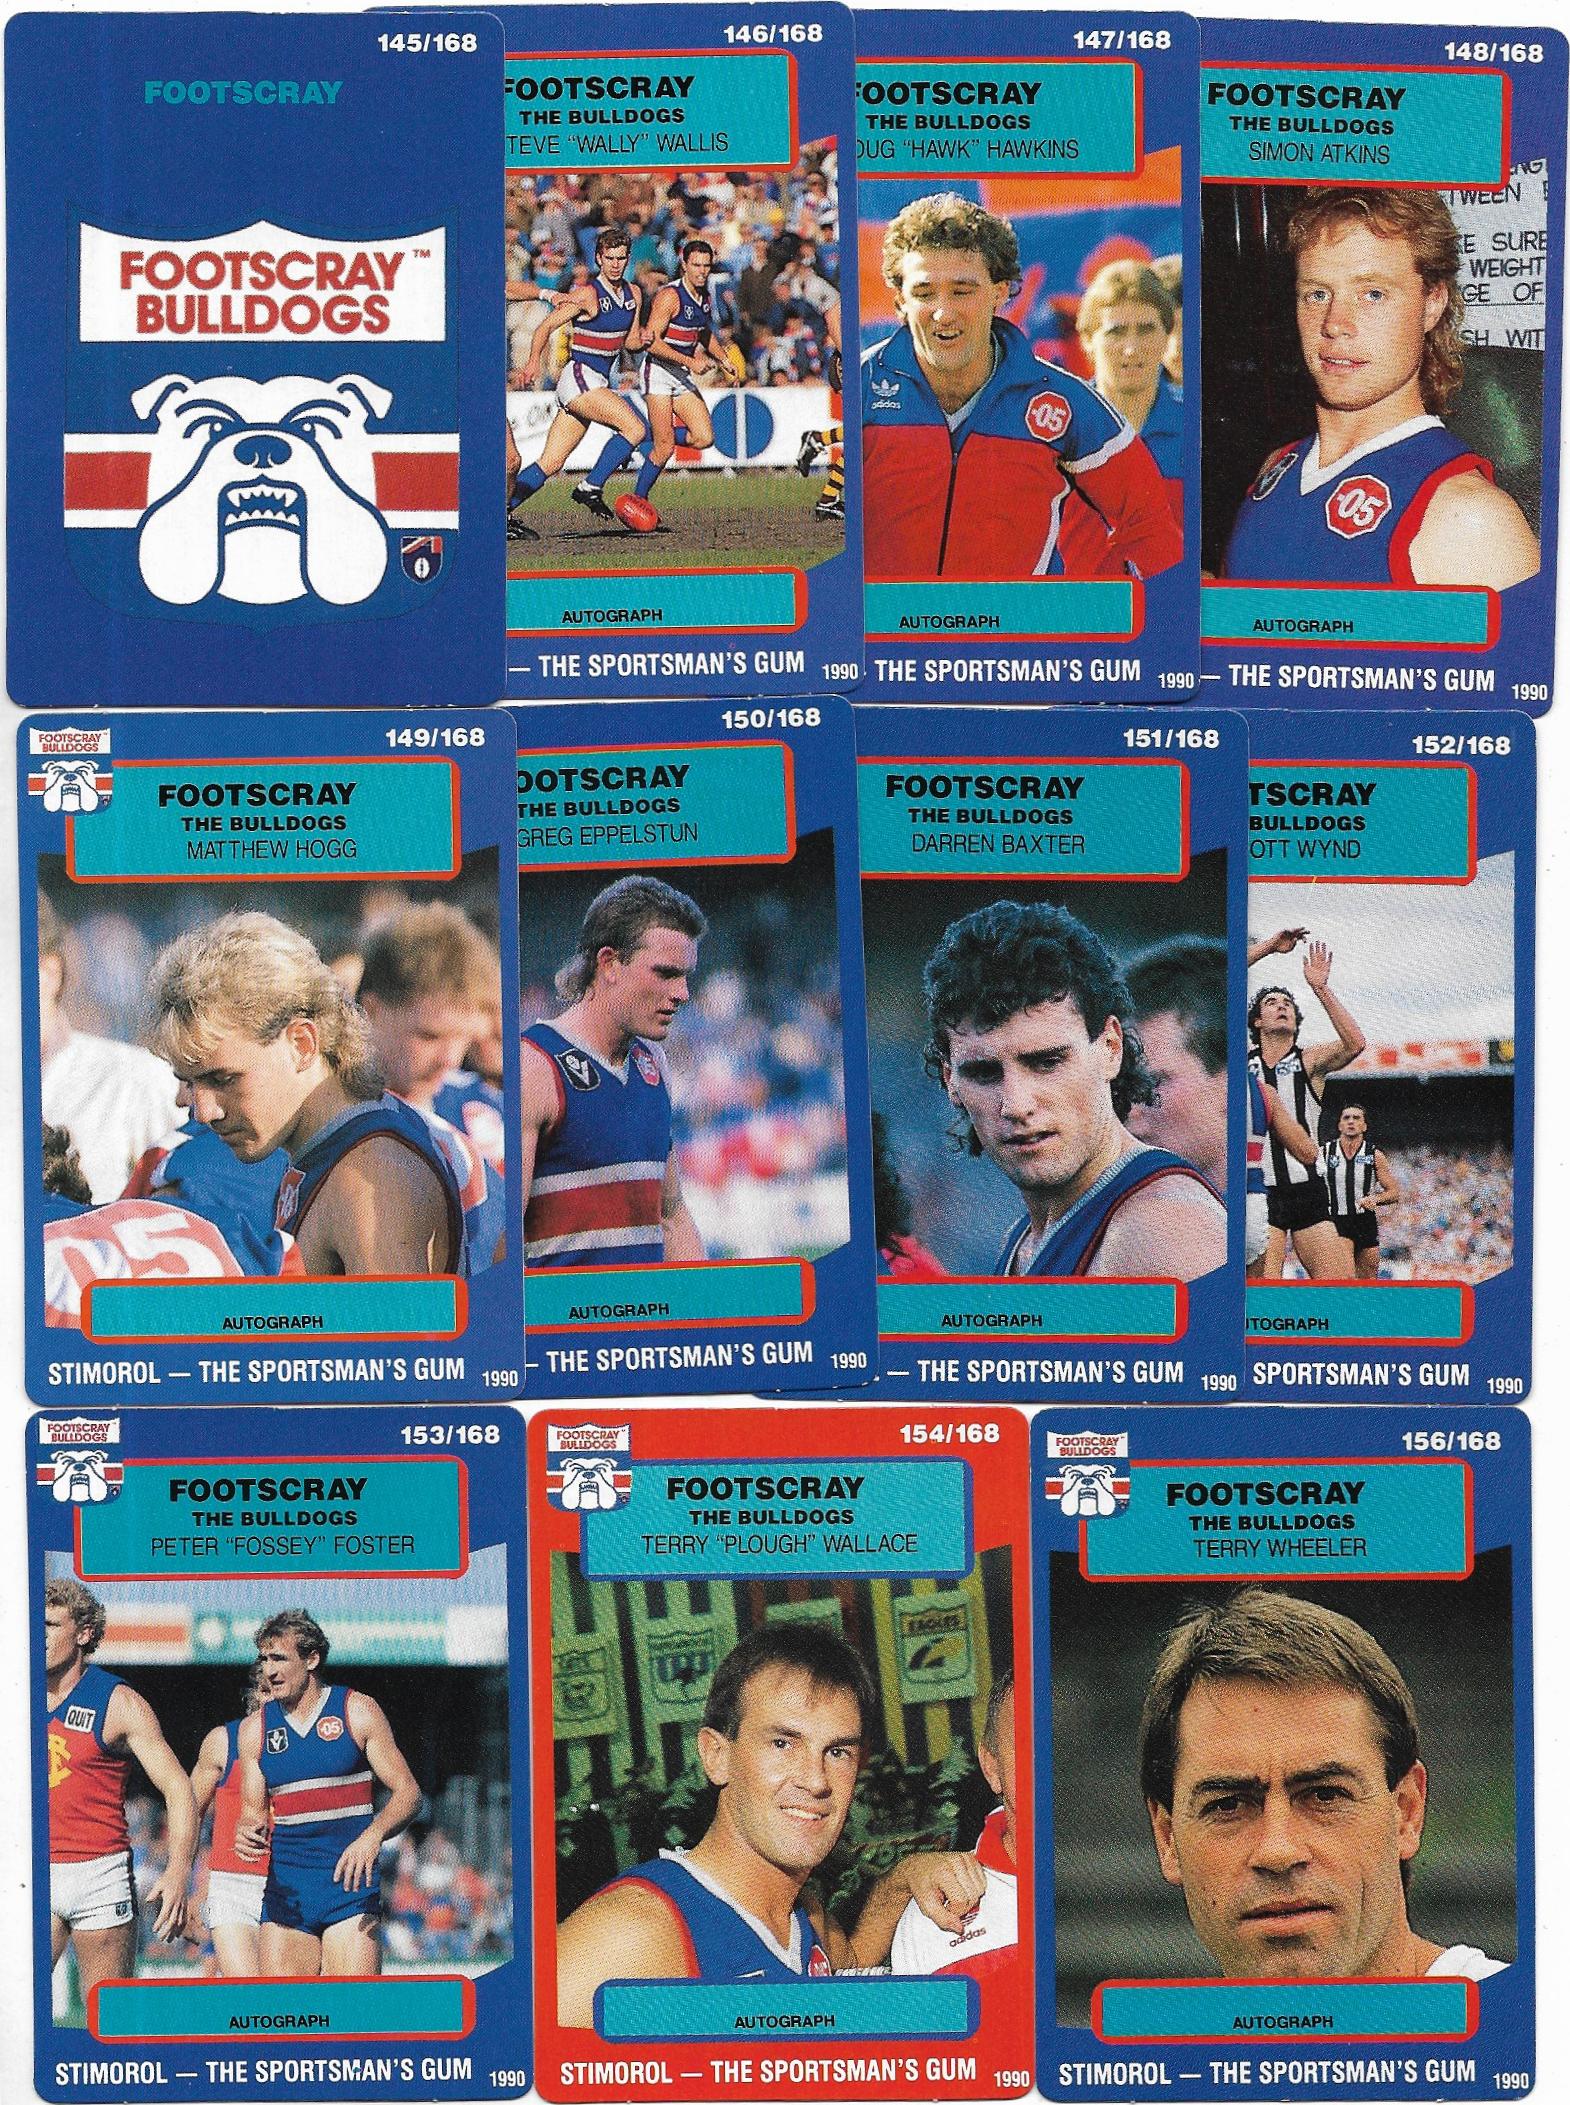 1990 Stimorol Team Set – Footscray